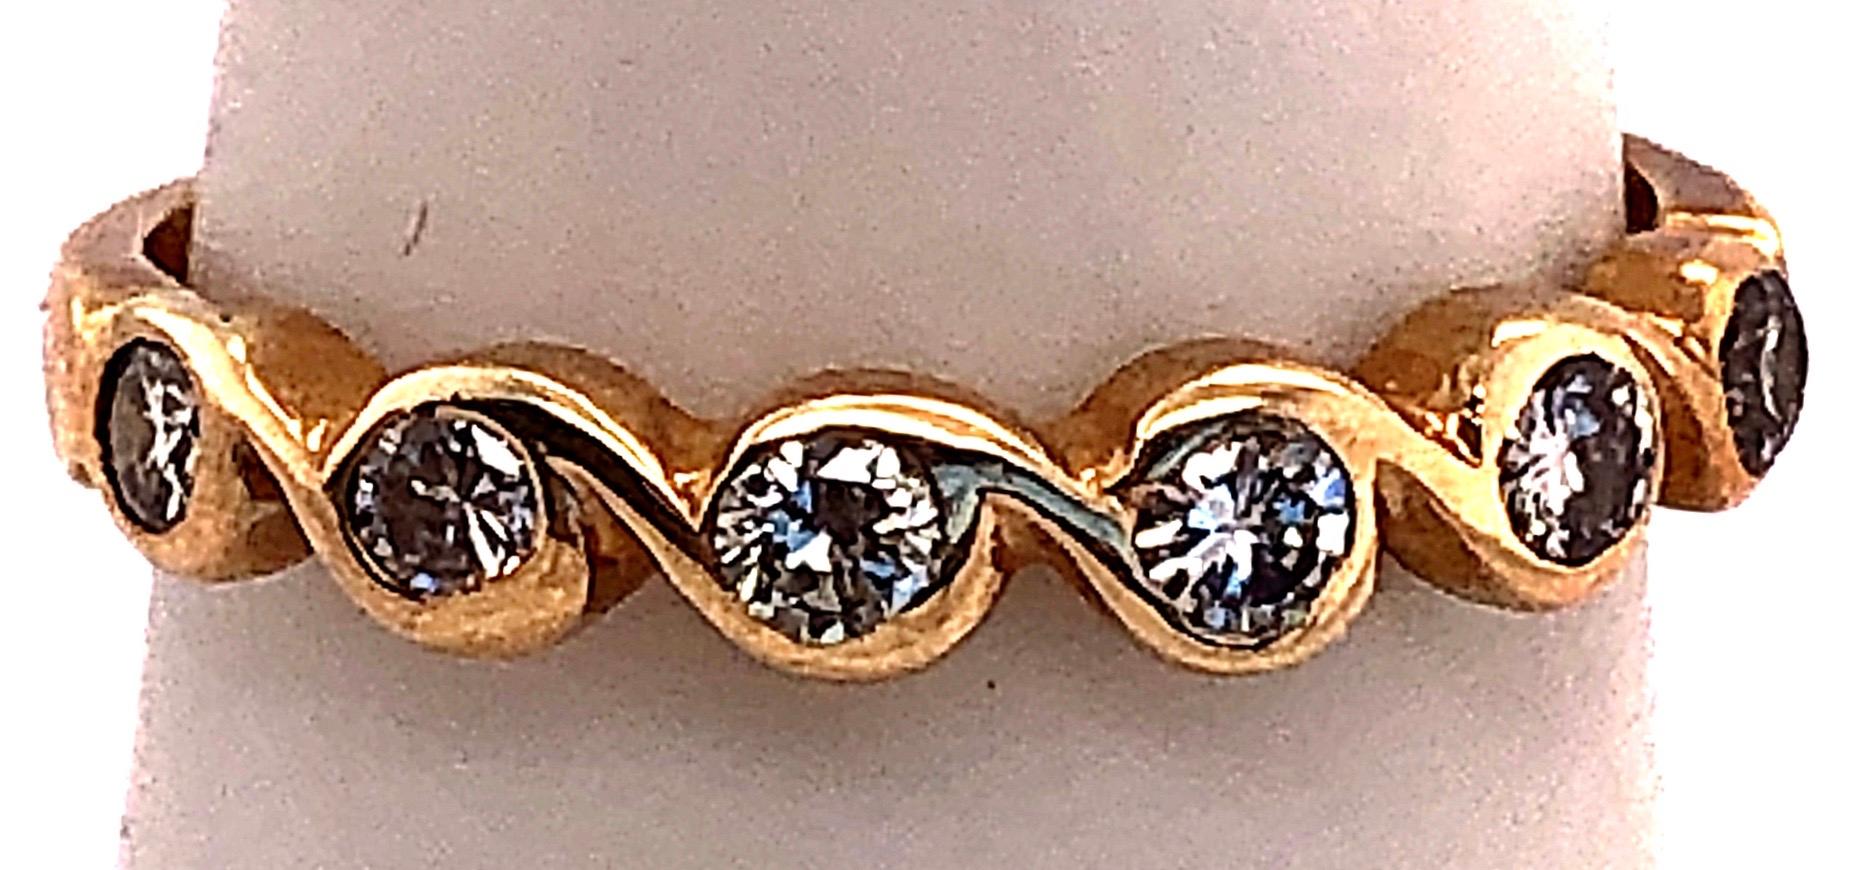 14 Karat Yellow Gold Diamond Band Wedding Bridal Anniversary Ring Size 7.
6 piece round diamonds 
1.96 grams total weight.